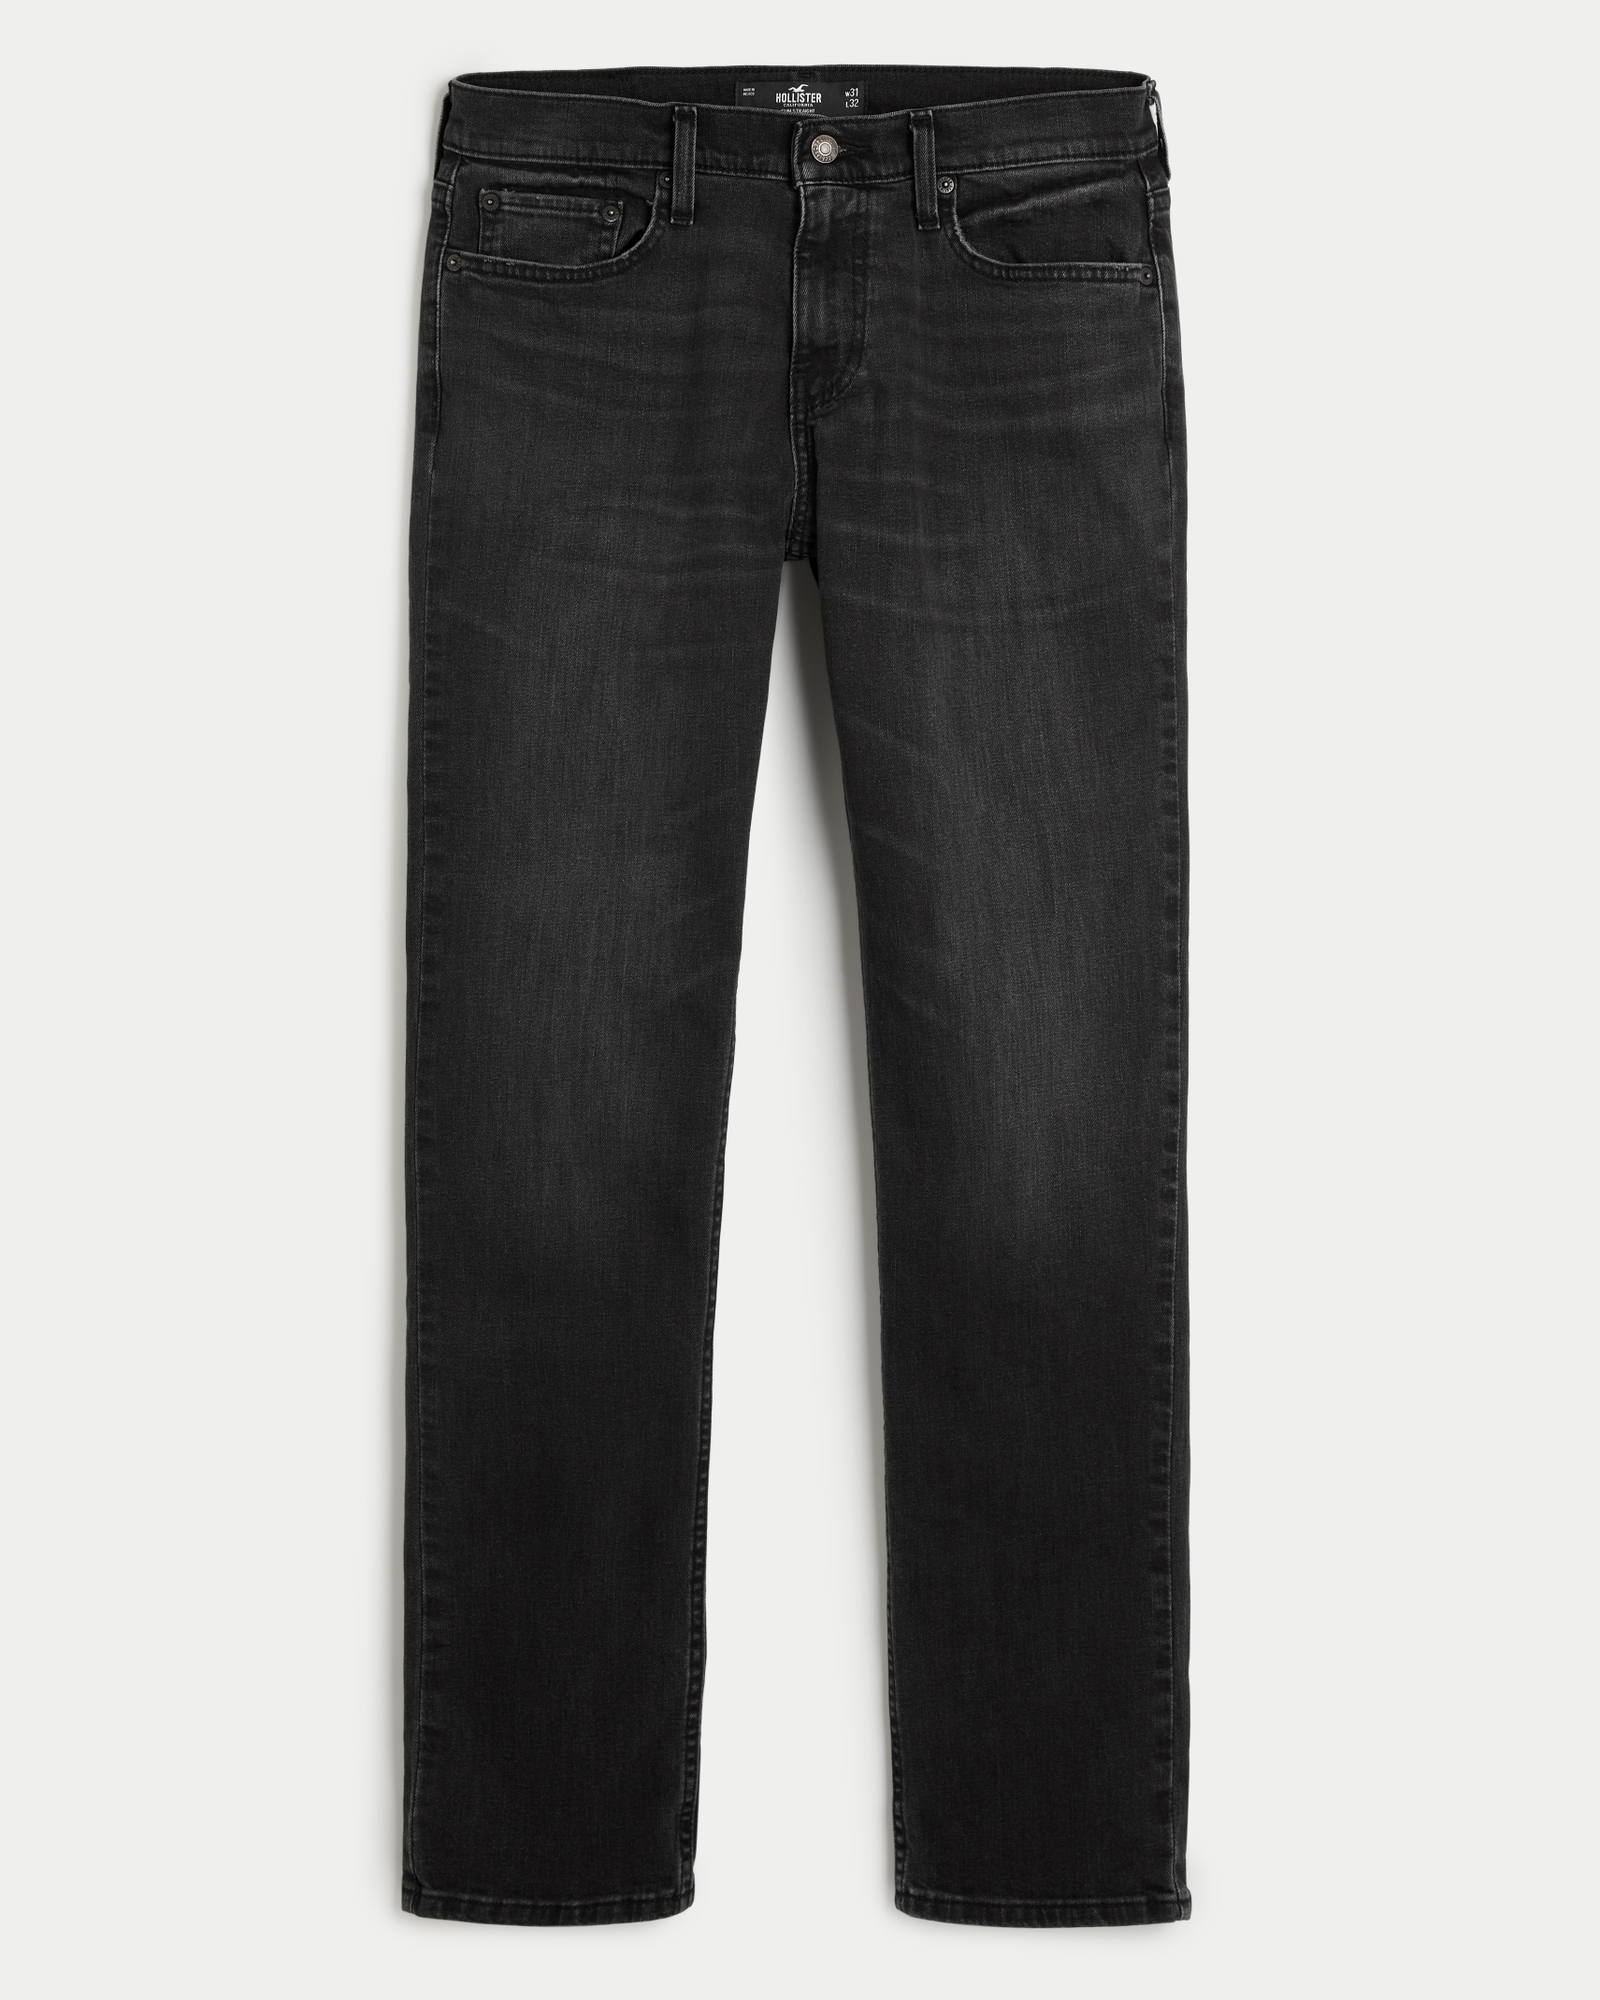 Men's Dark Wash Slim Straight Jeans, Men's Bottoms